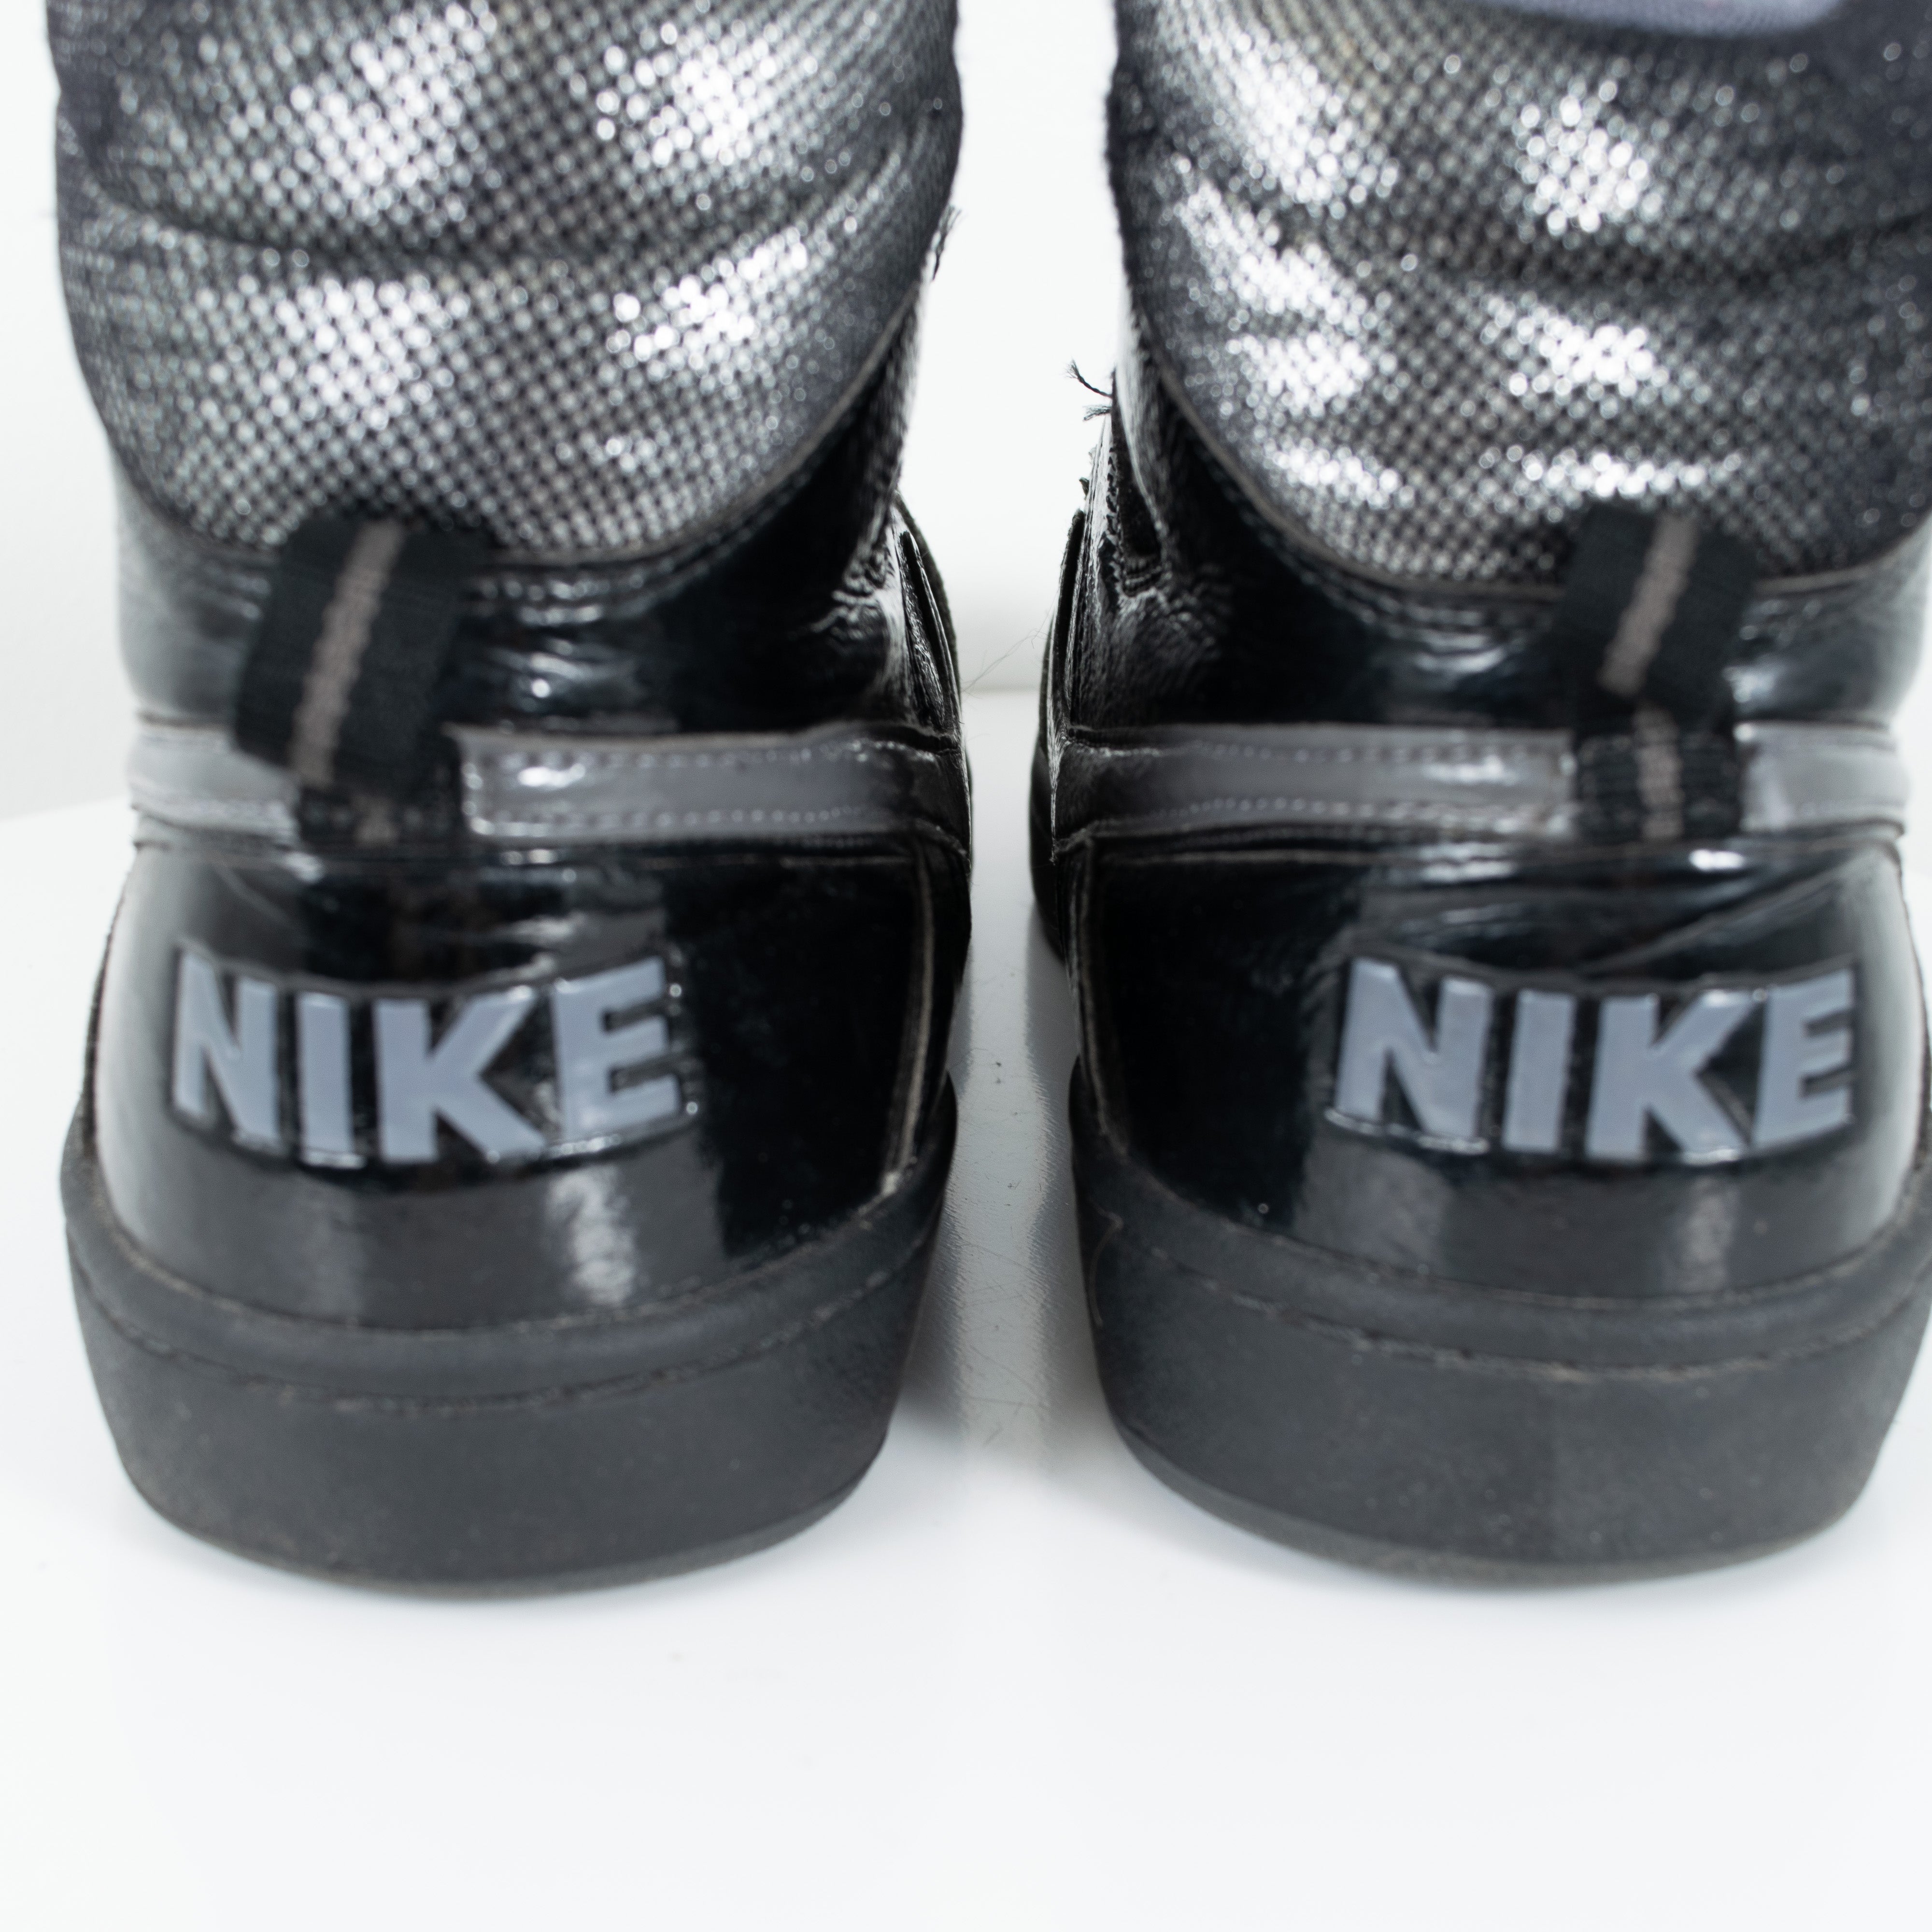 Nike Metallic Black High Top Sneakers Men's EU40